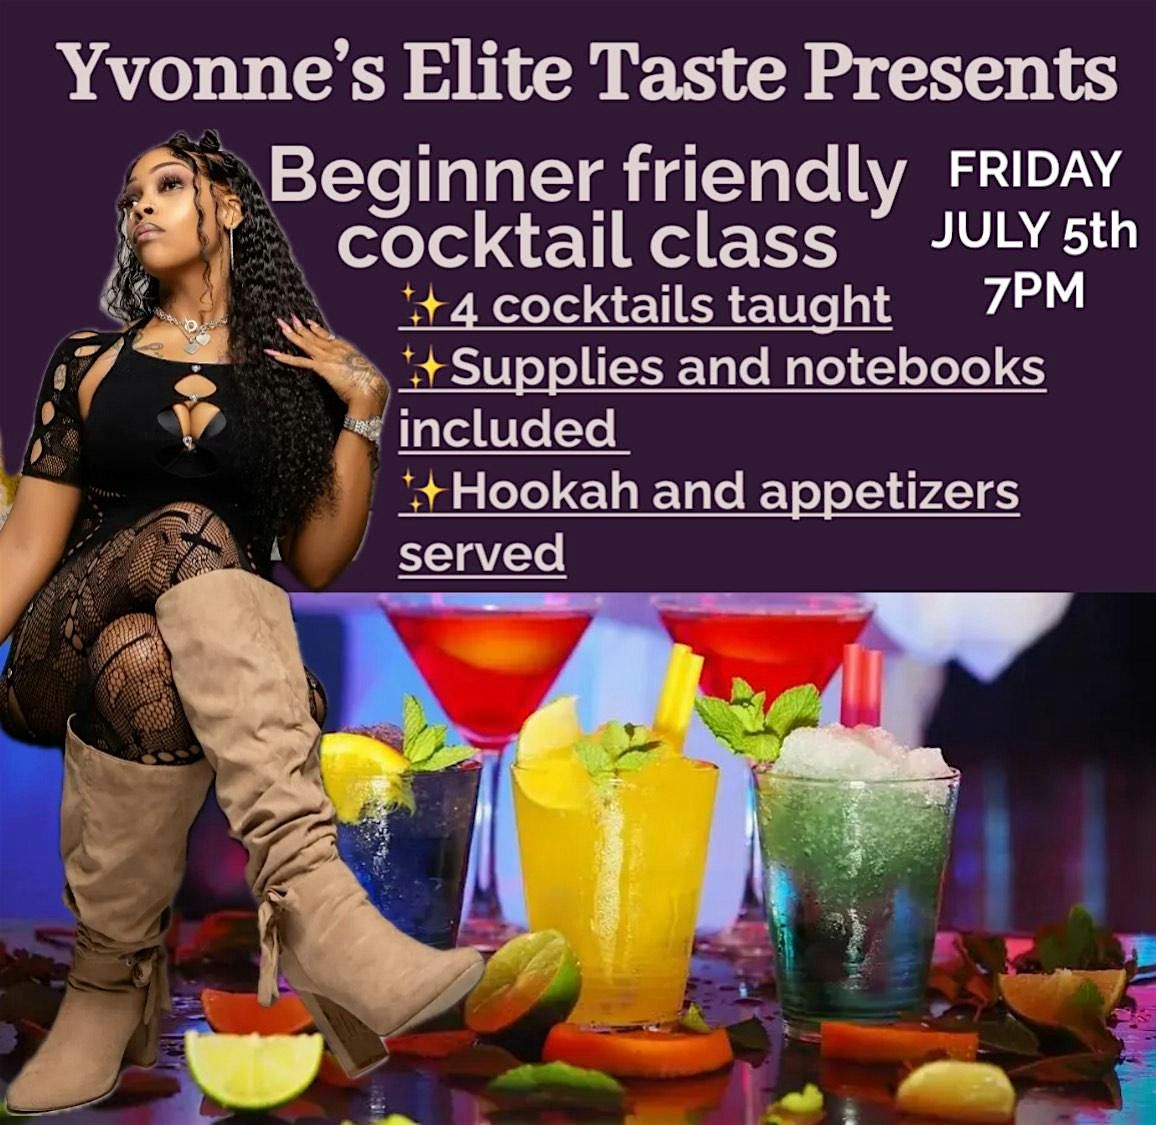 Yvonne\u2019s Elite taste beginner friendly cocktail making class!